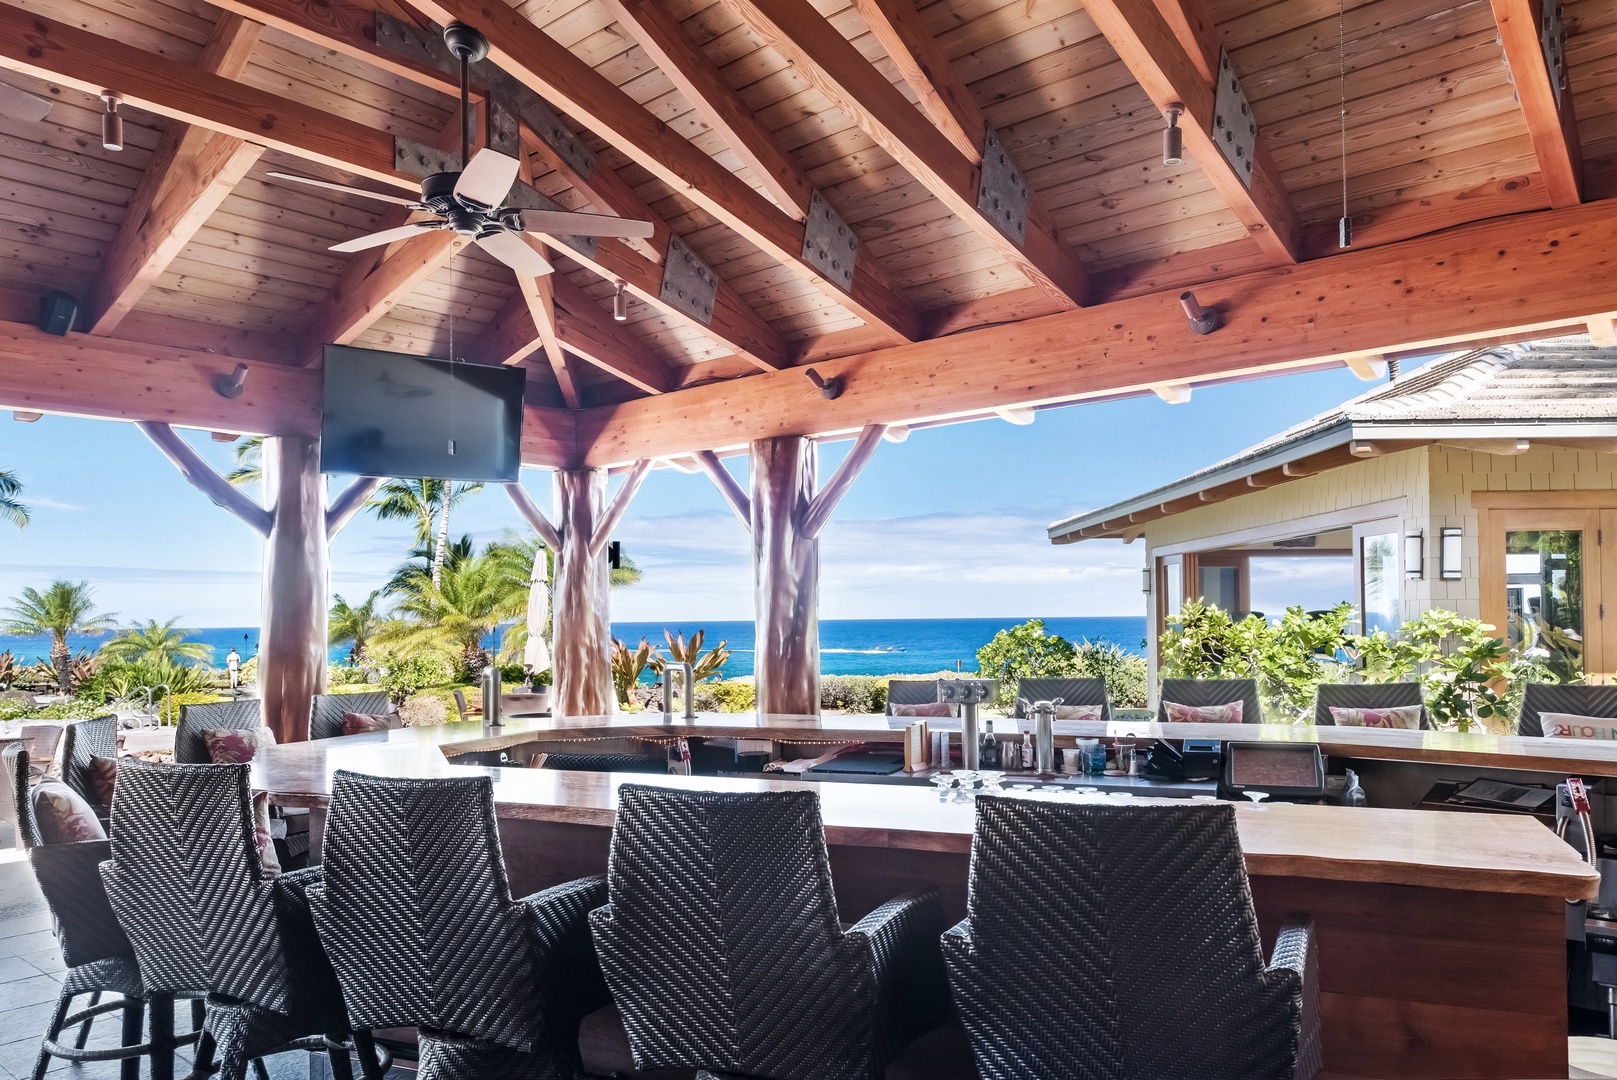 Waikoloa Vacation Rentals, 3BD Hali'i Kai (12G) at Waikoloa Resort - A bar with a view! Hali'i Kai Resort's private Ocean Club Bar & Grille